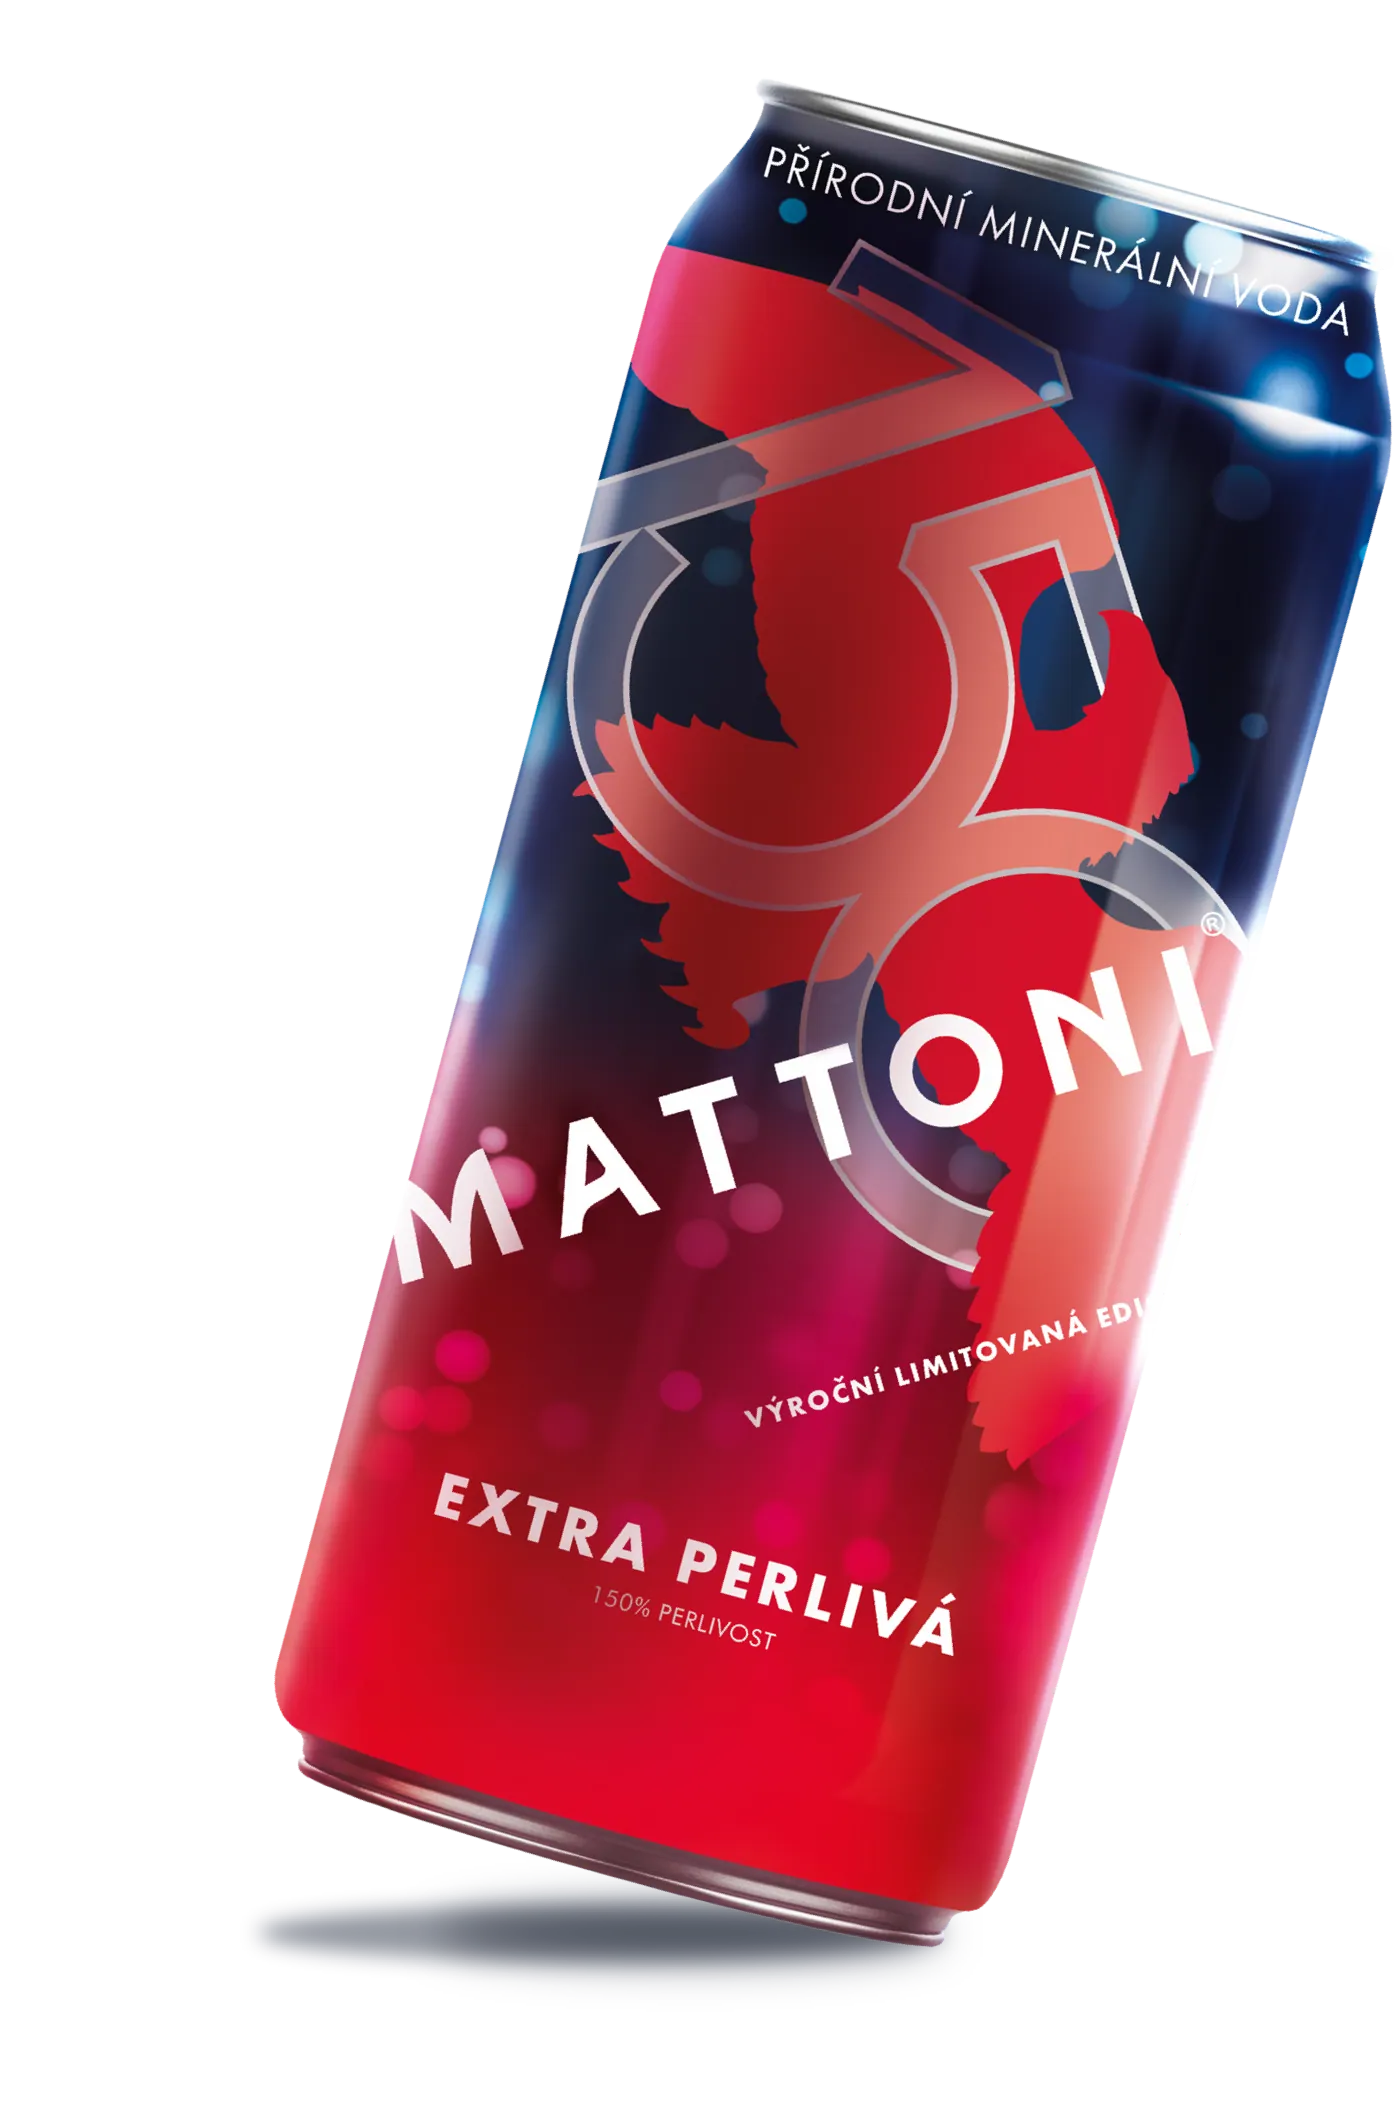 Mattoni Extra Perlivá